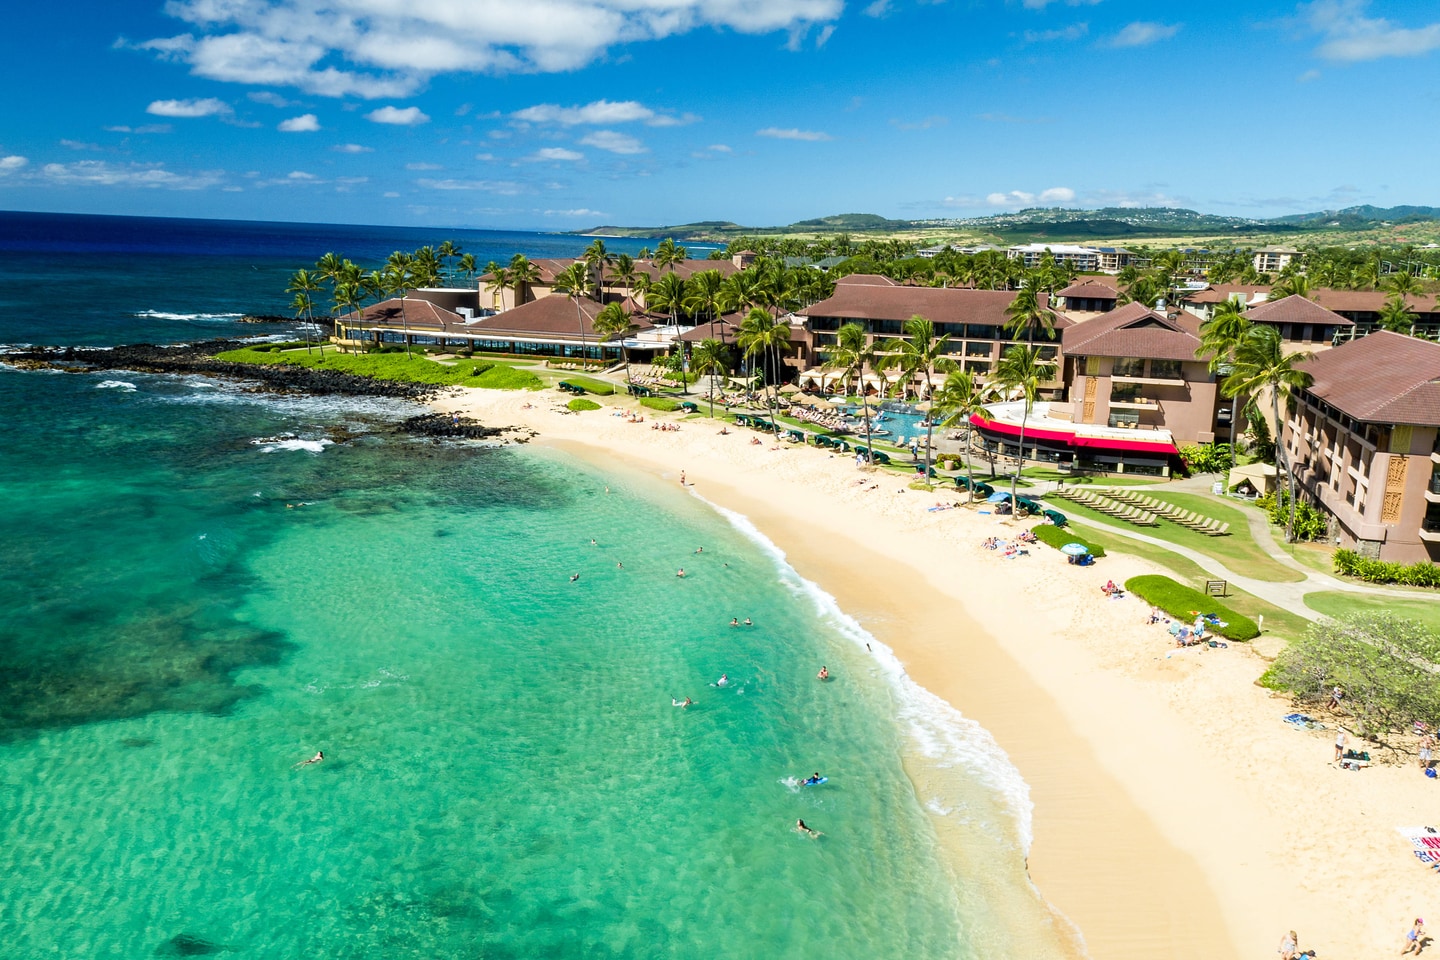 Best Marriott Beach Hotels & Resorts in Hawaii For Your Marriott Free Night Certificate